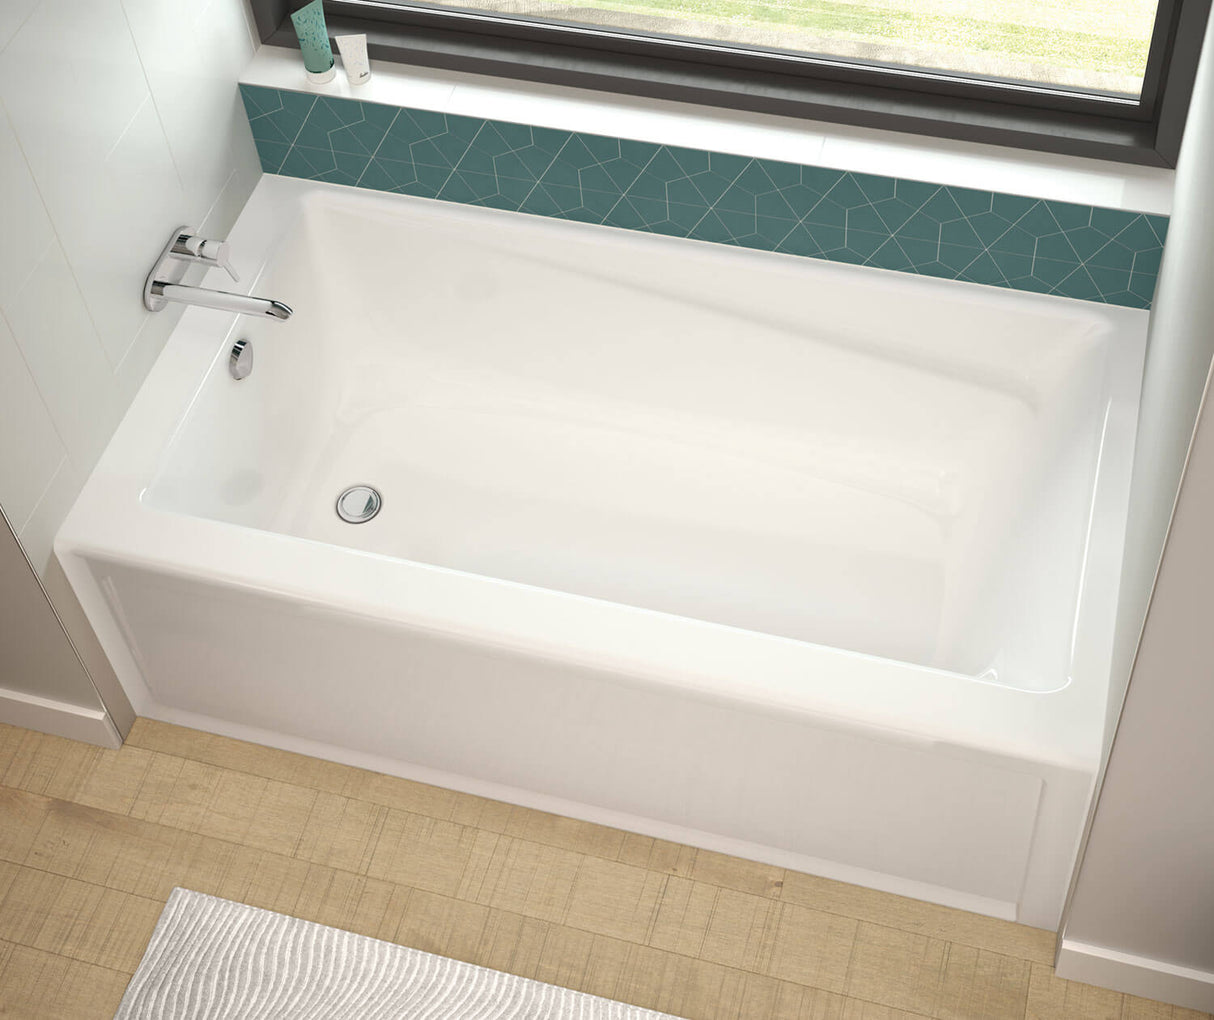 MAAX 106172-R-097-001 Exhibit 6036 IFS Acrylic Alcove Right-Hand Drain Combined Whirlpool & Aeroeffect Bathtub in White